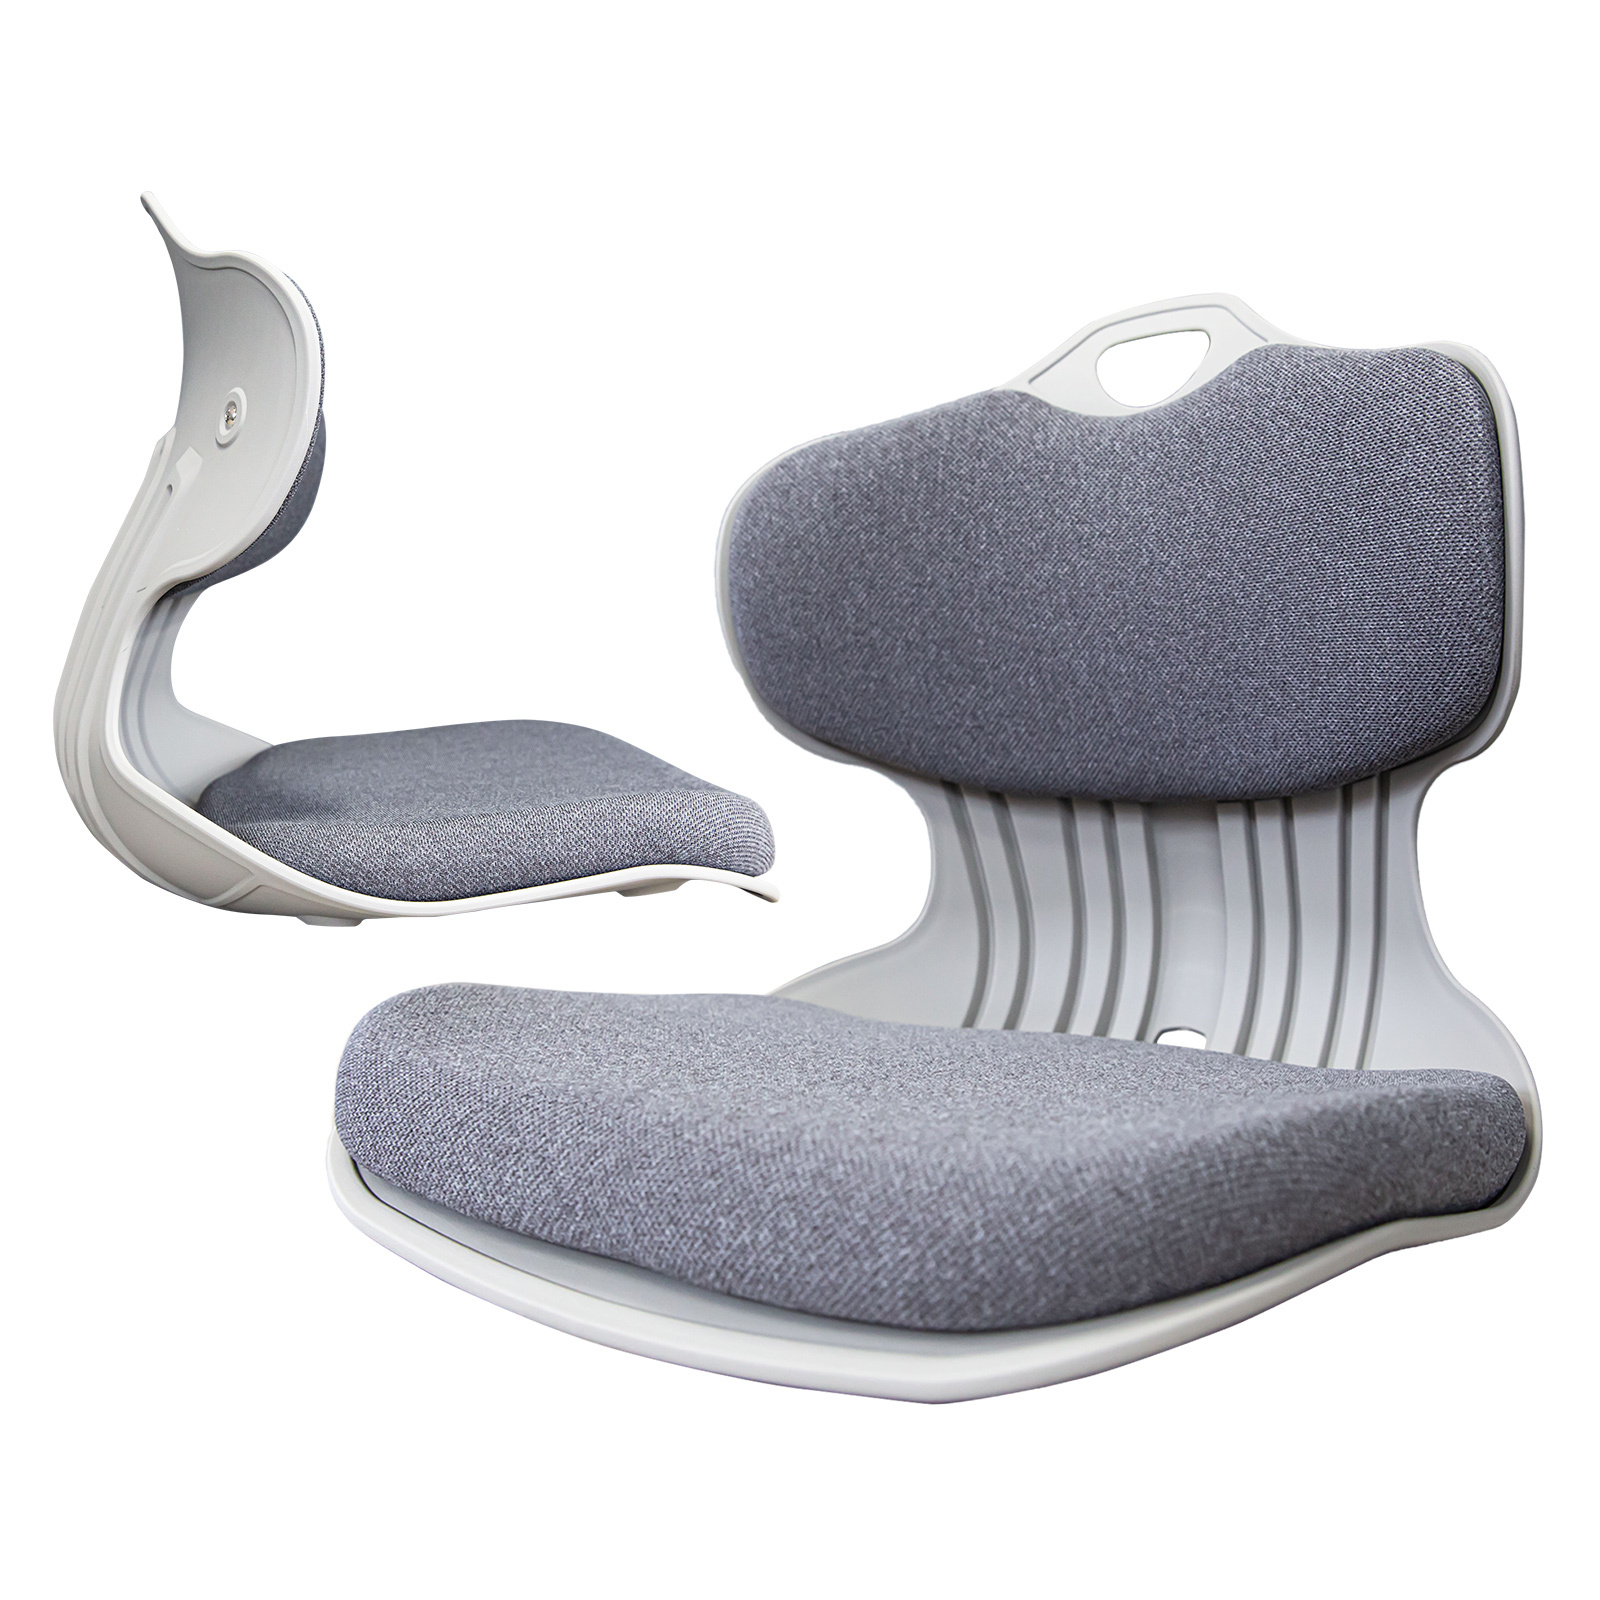 2X Korean Slender Posture Correction Chair - GREY